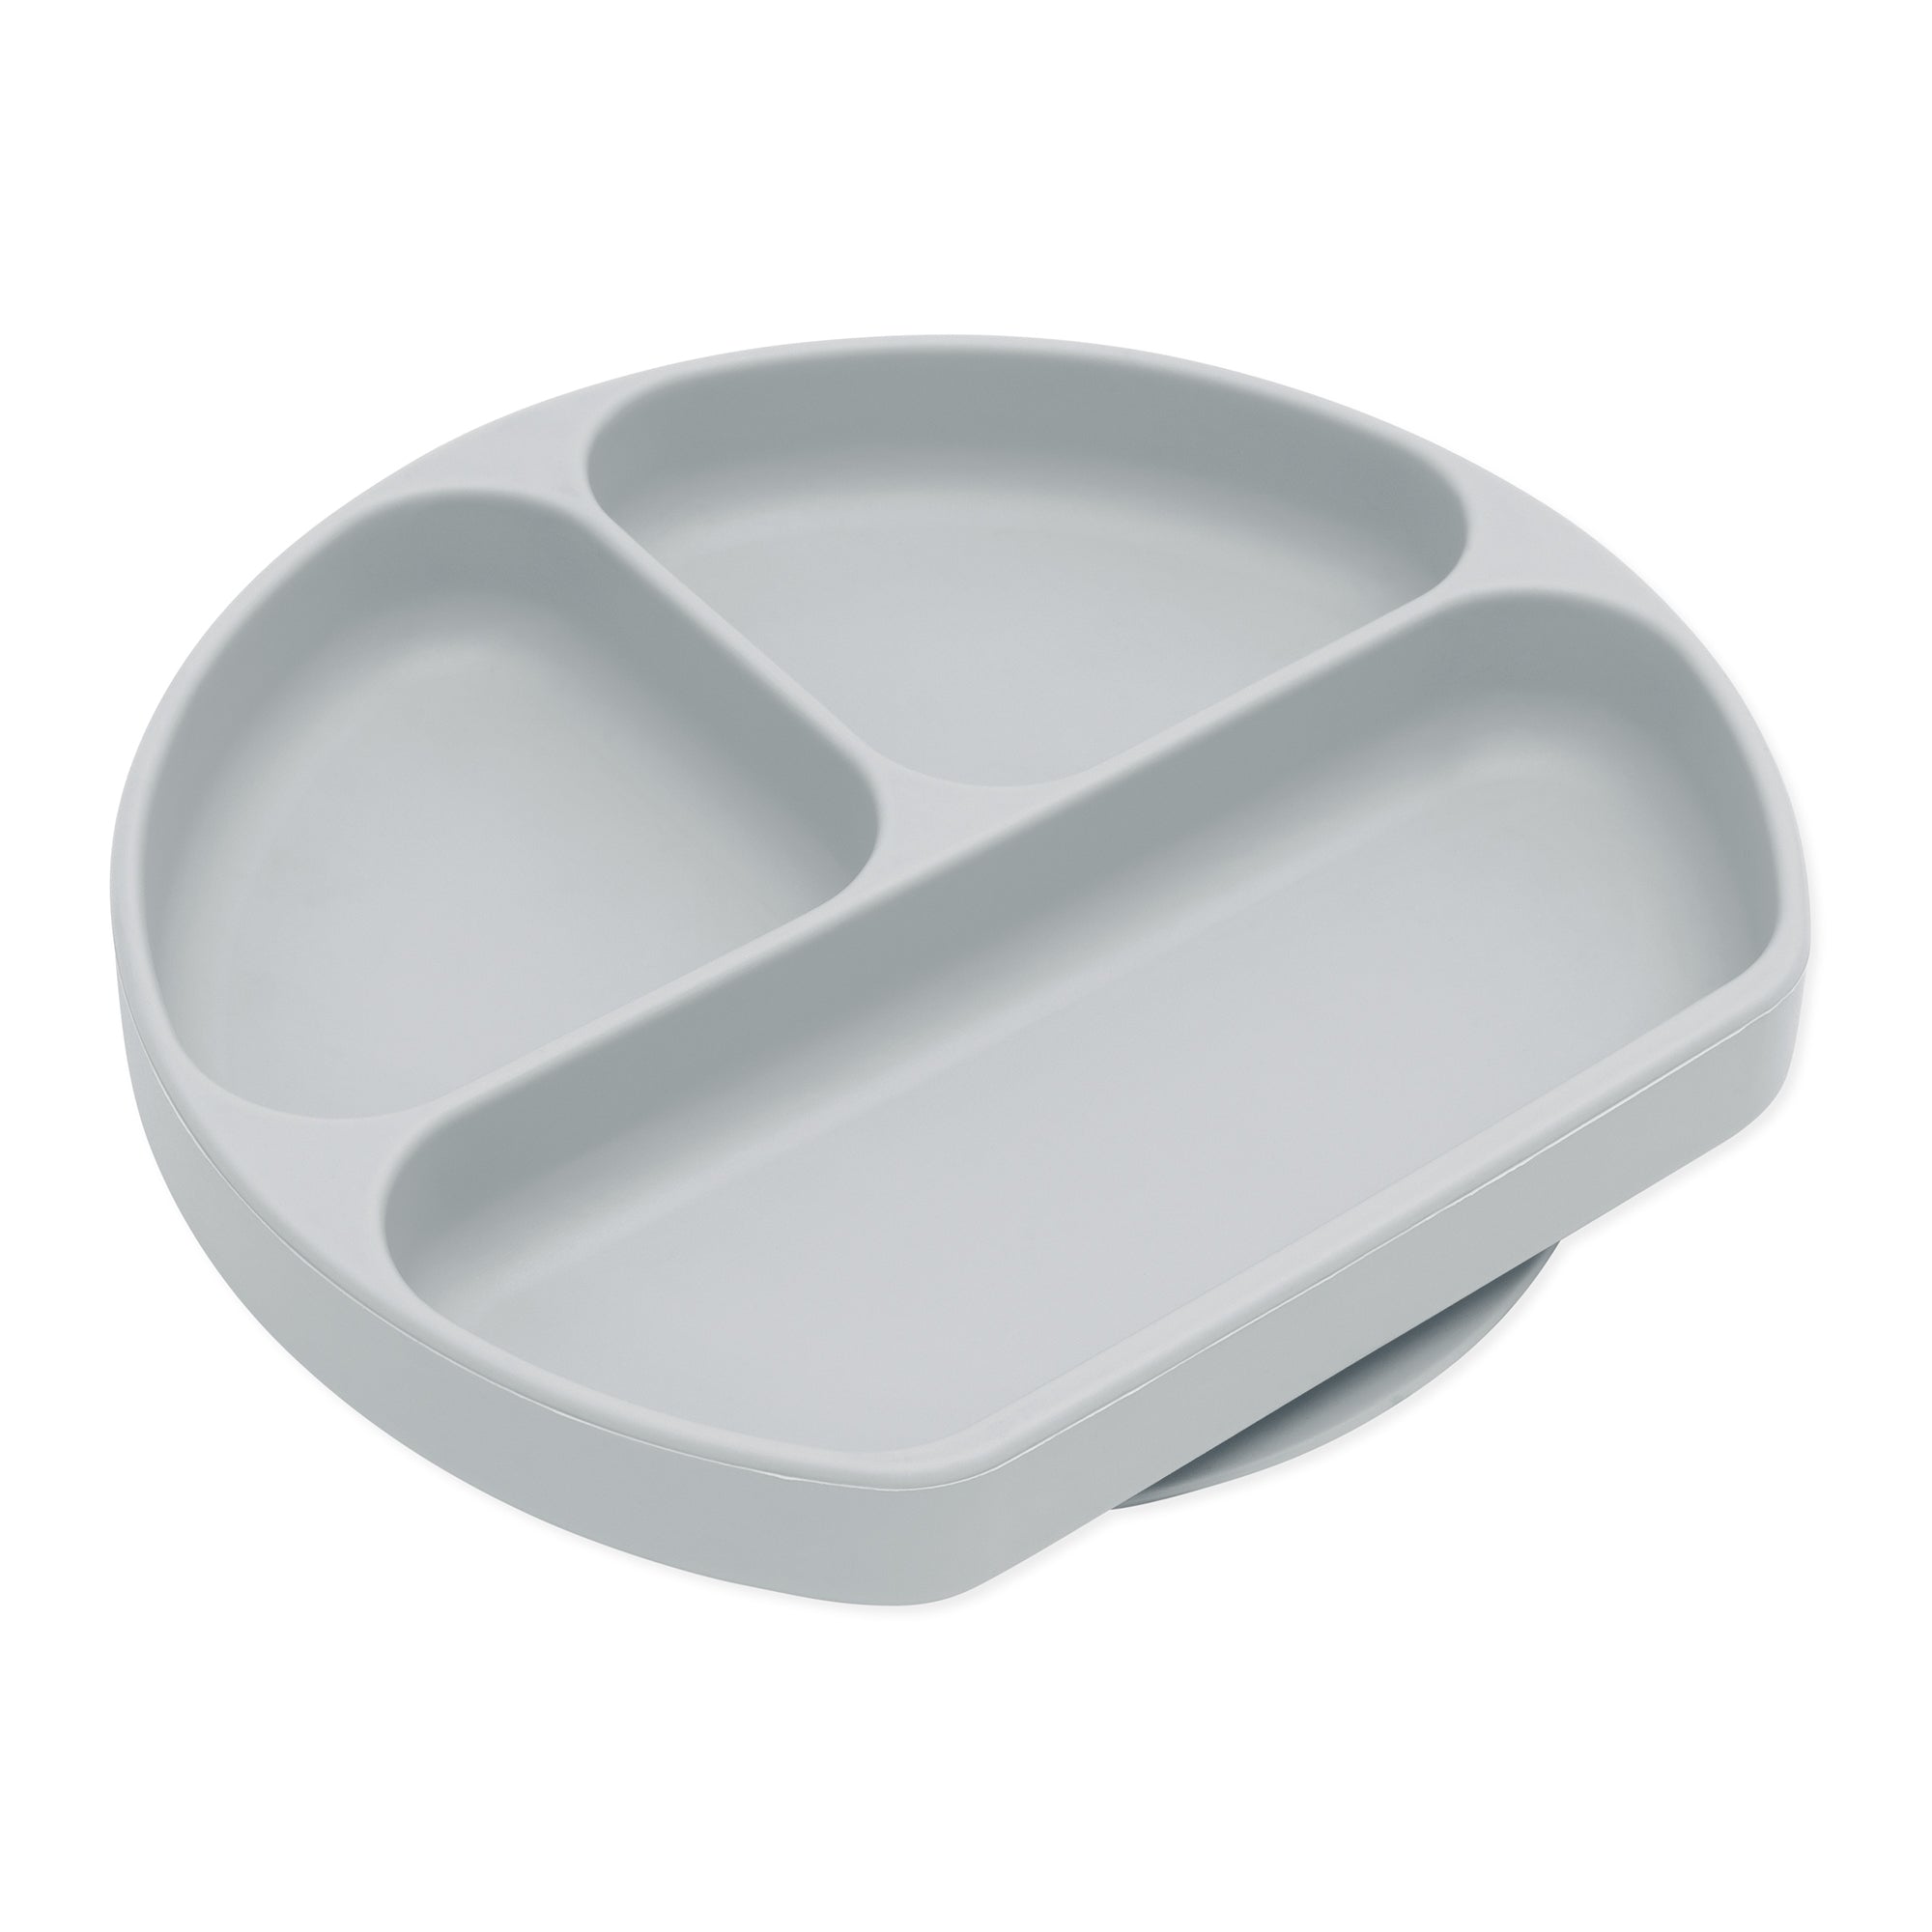 Silicone Grip Dish: Gray